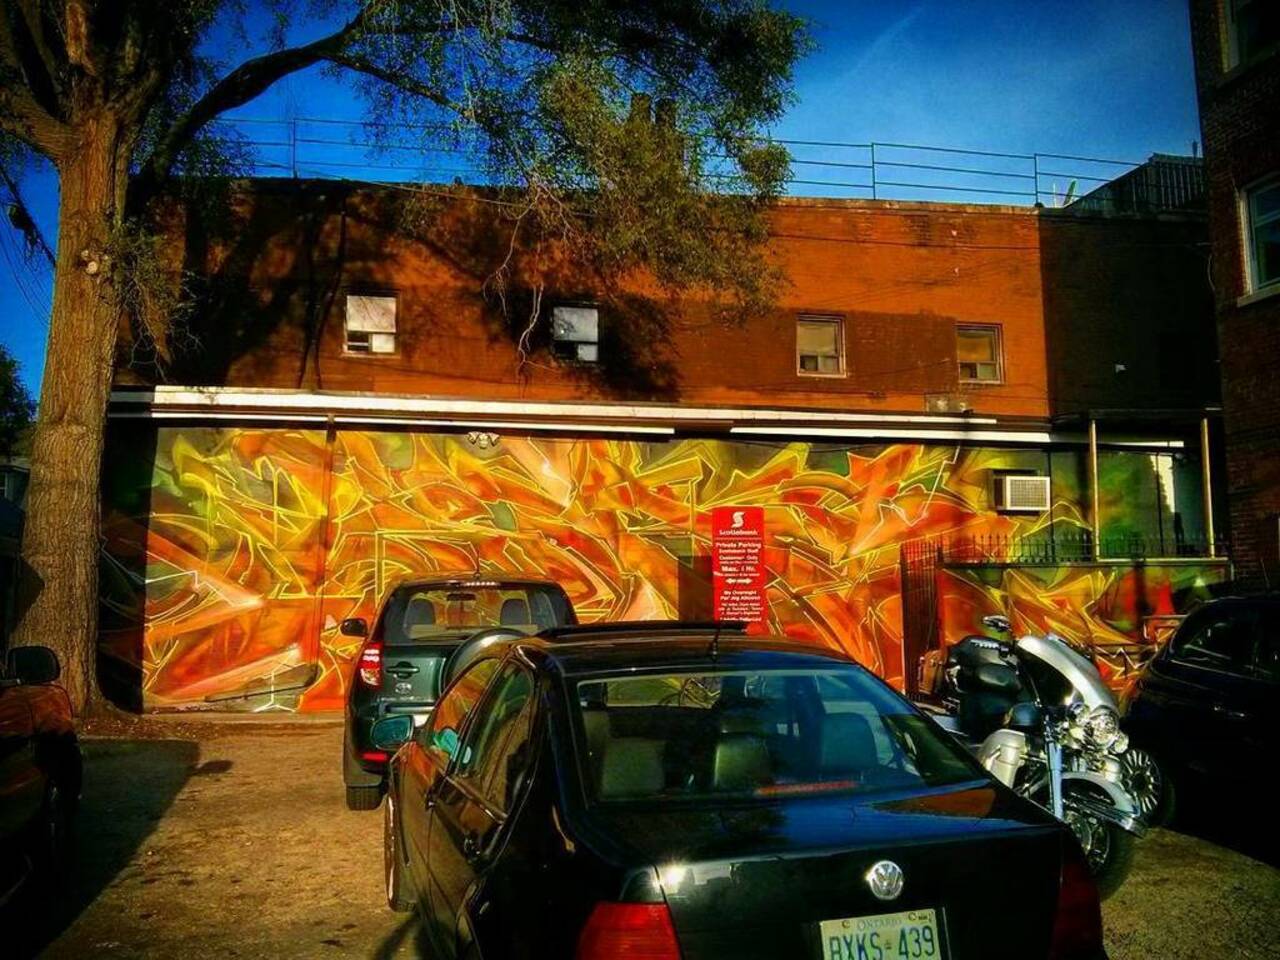 RT @artpushr: via #graff_n_such "http://ift.tt/1ReYjIc" #graffiti #streetart http://t.co/XJq9SzSwV4